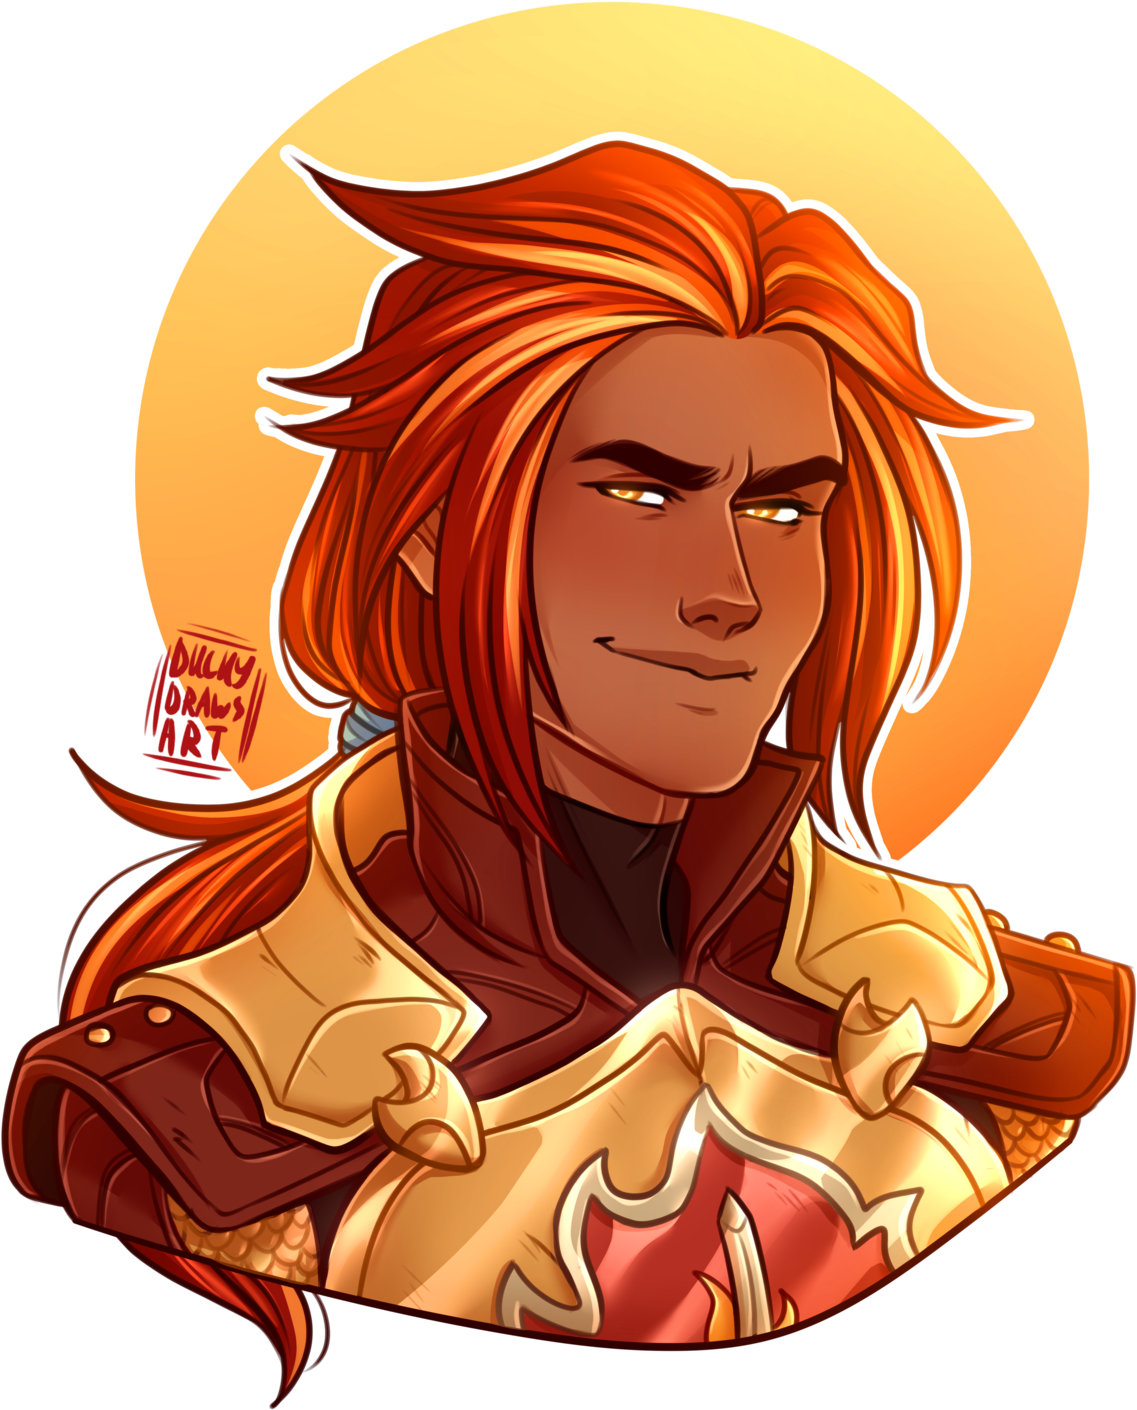 Flame Haired Fantasy Warrior Illustration PNG